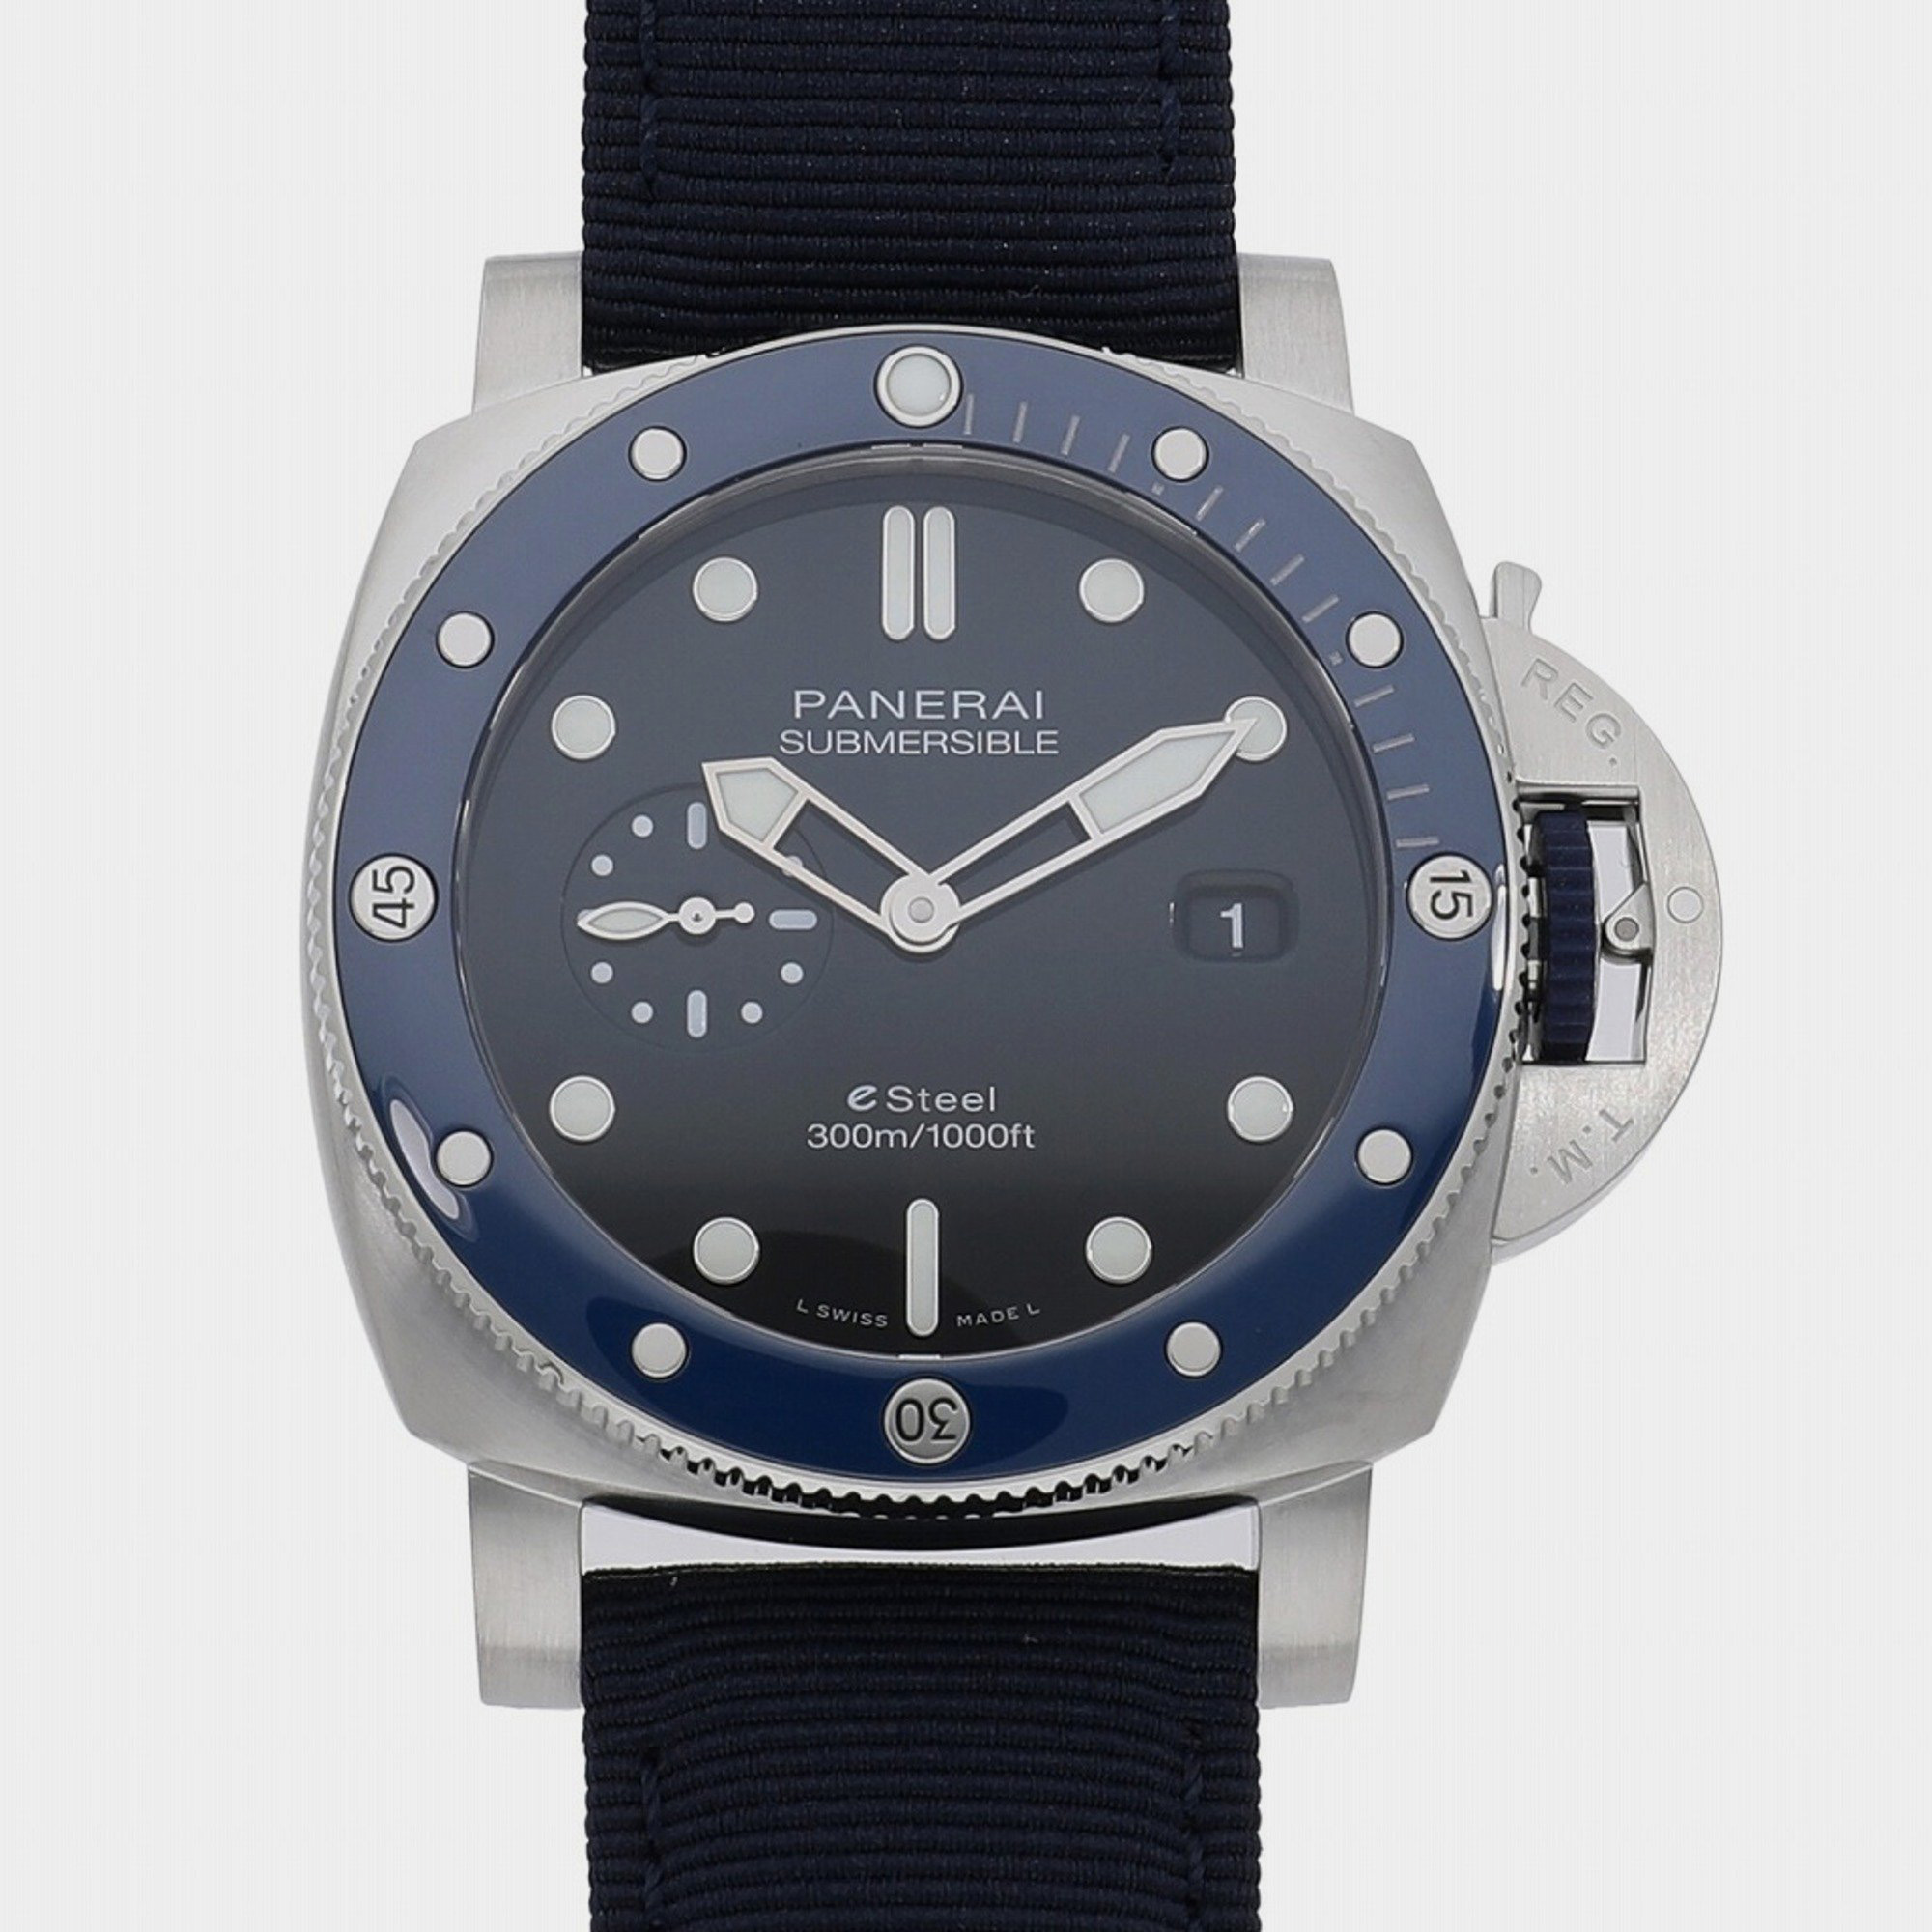 Panerai blue stainless steel submersible quaranta quattro esteel pam01289 automatic men's wristwatch 44mm